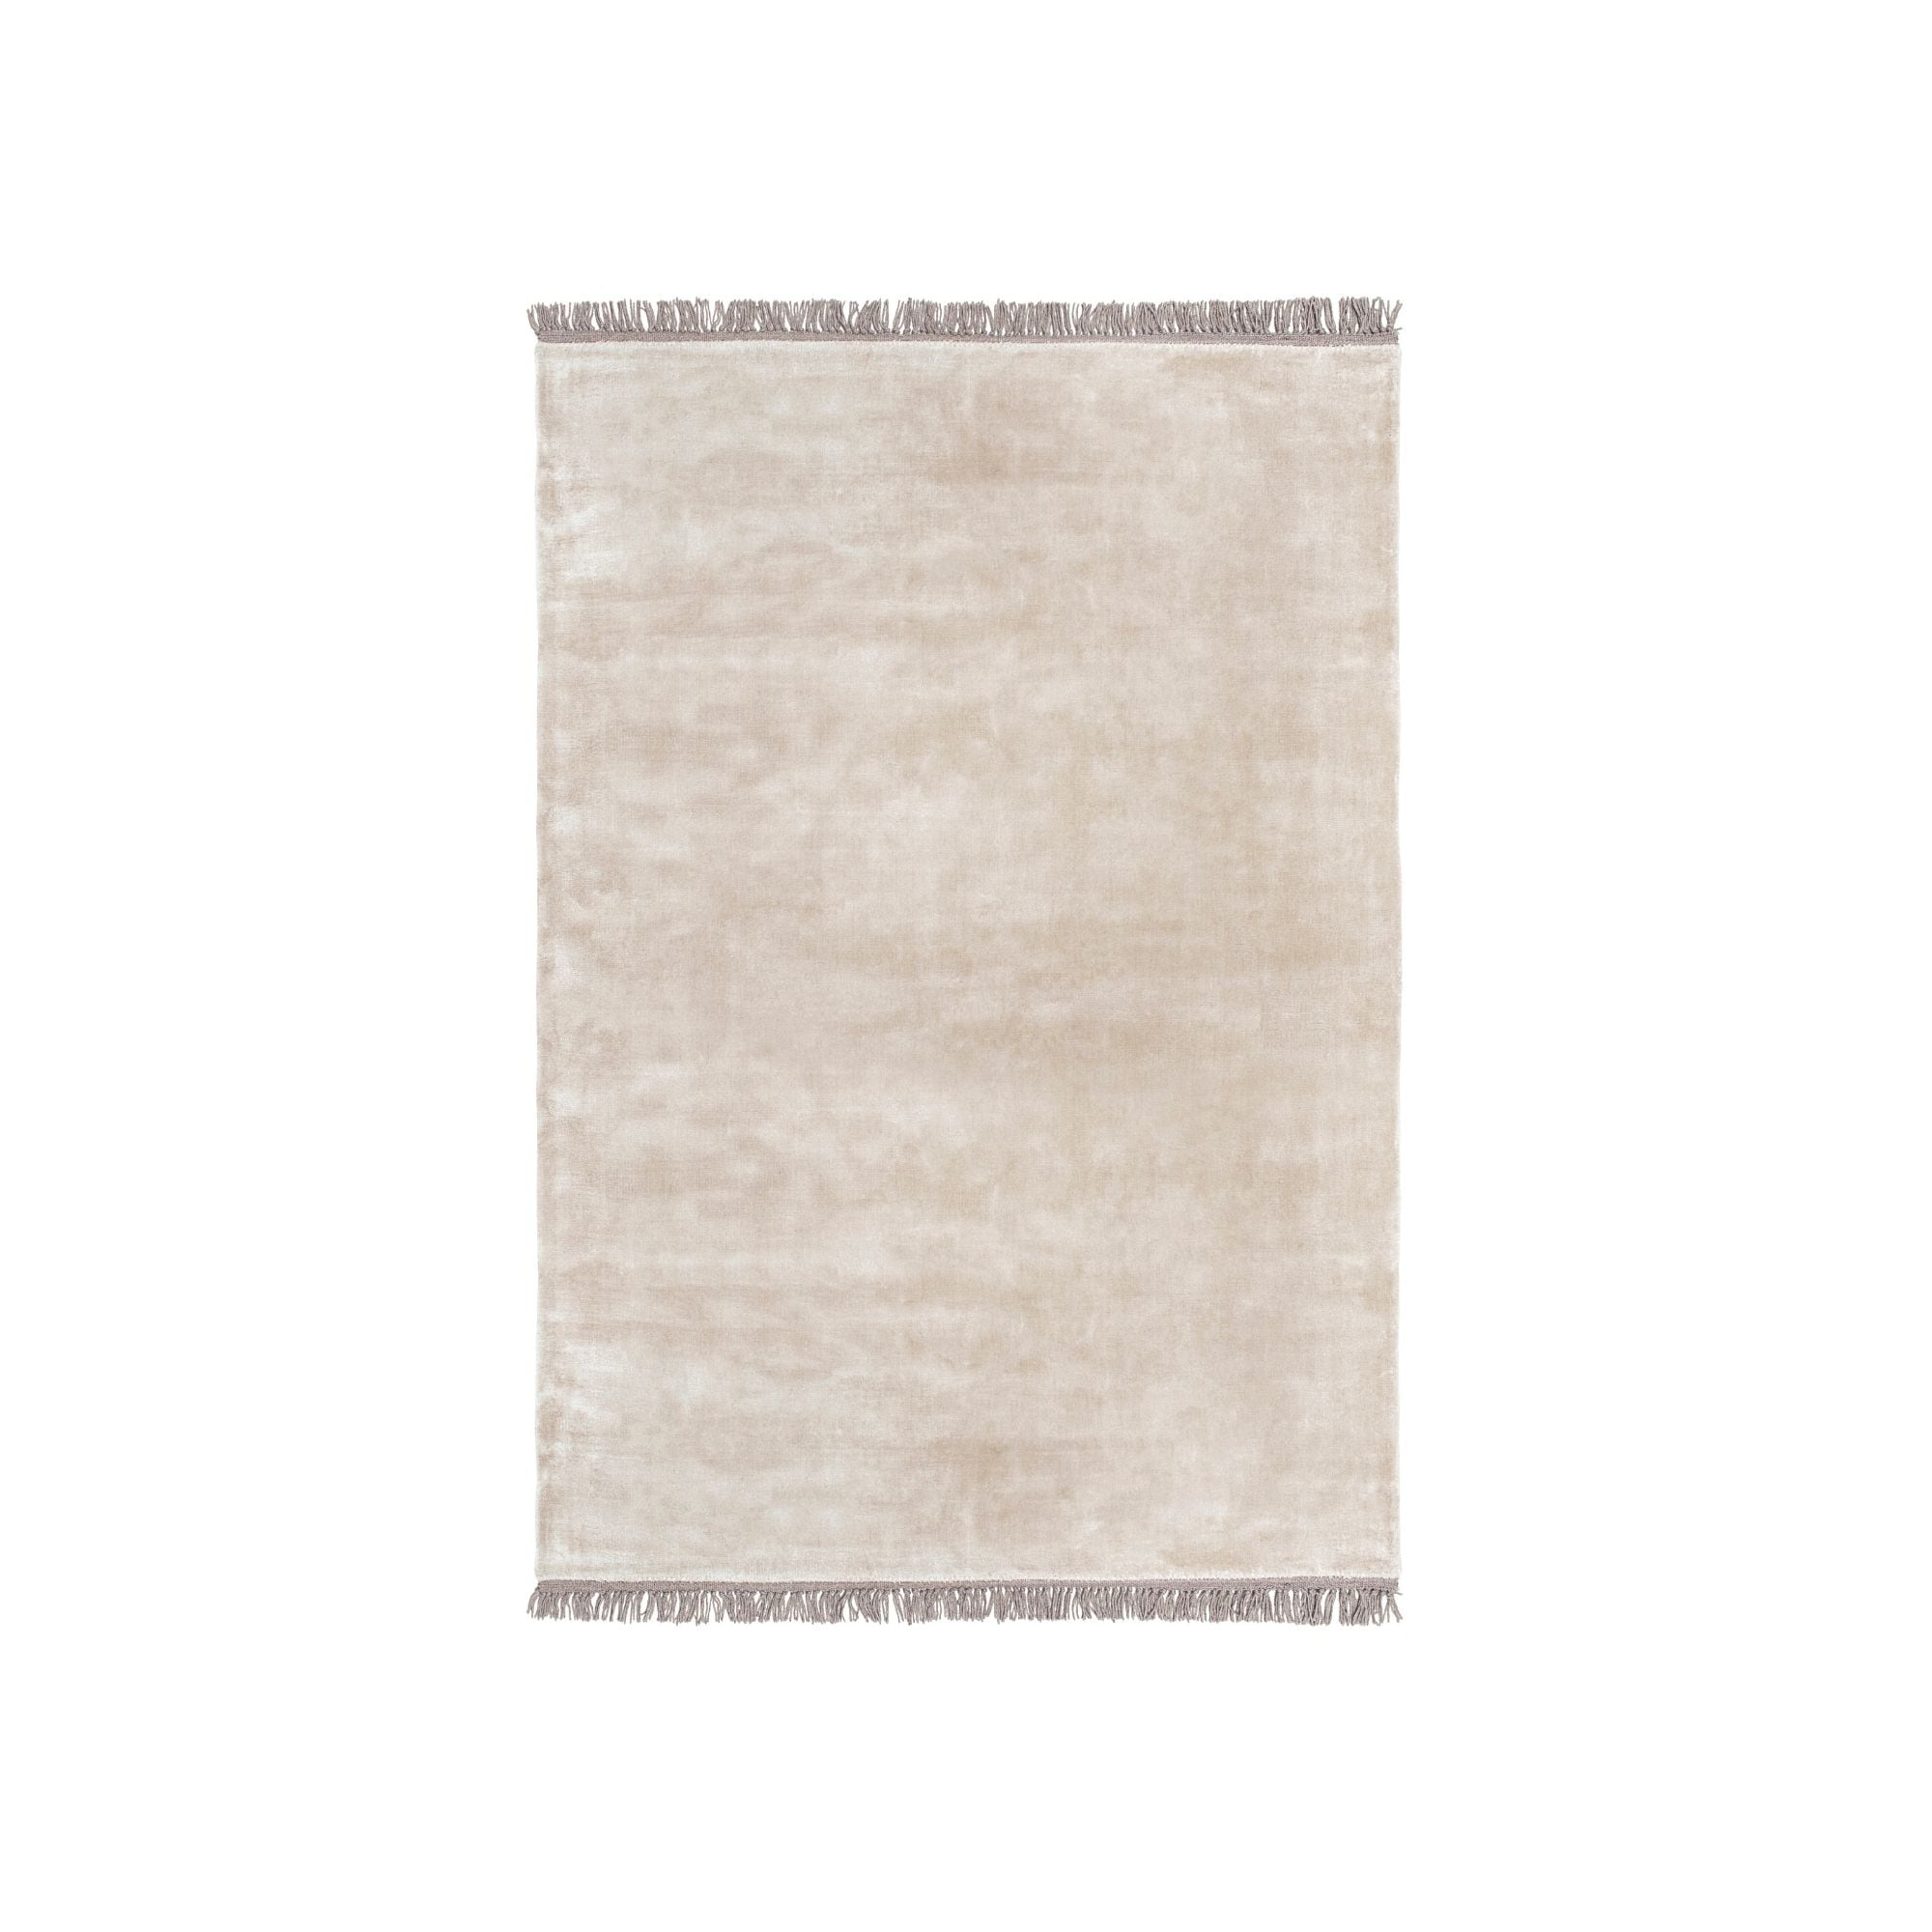 Willows Rambling - Handgjord matta